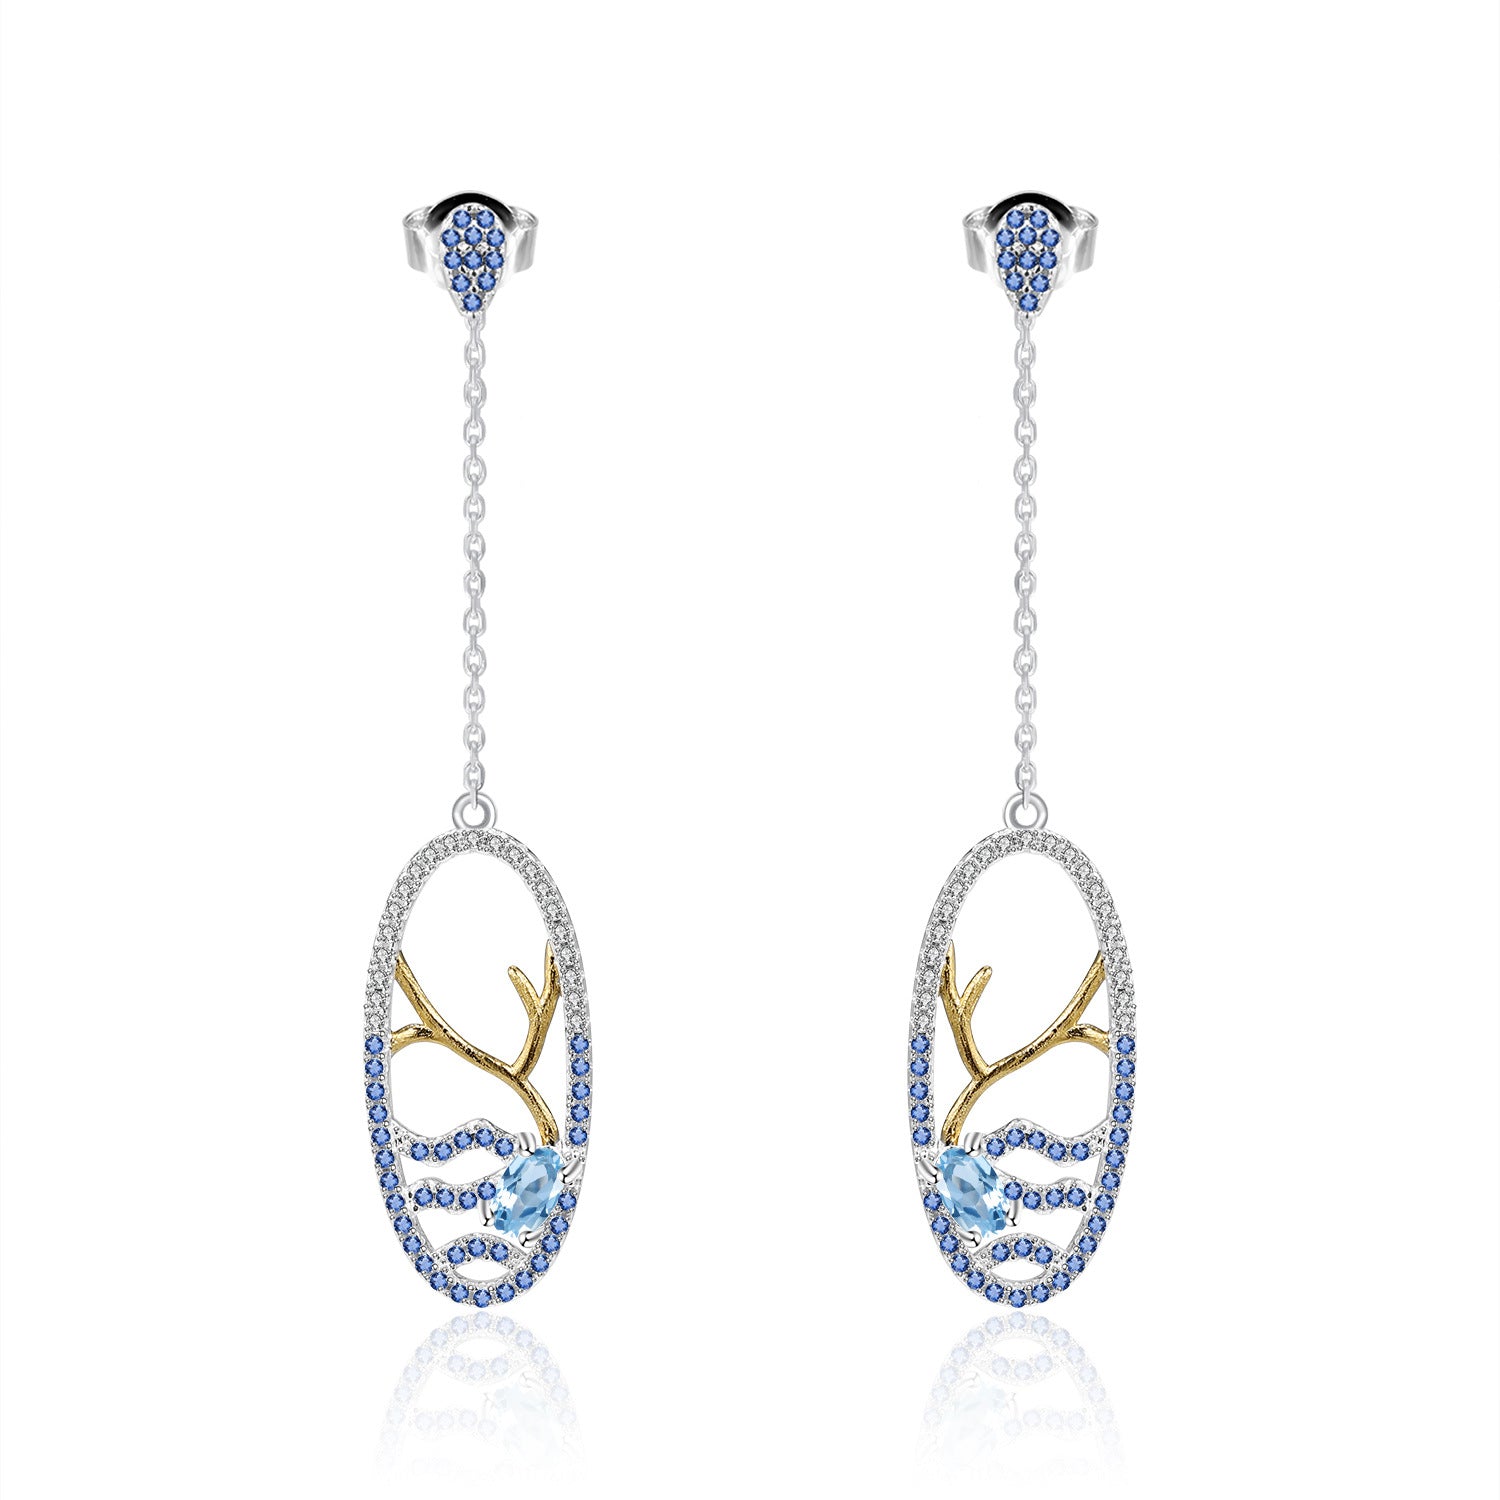 Natural Topaz Lake In Oval Long Design Silver Drop Earrings for Women